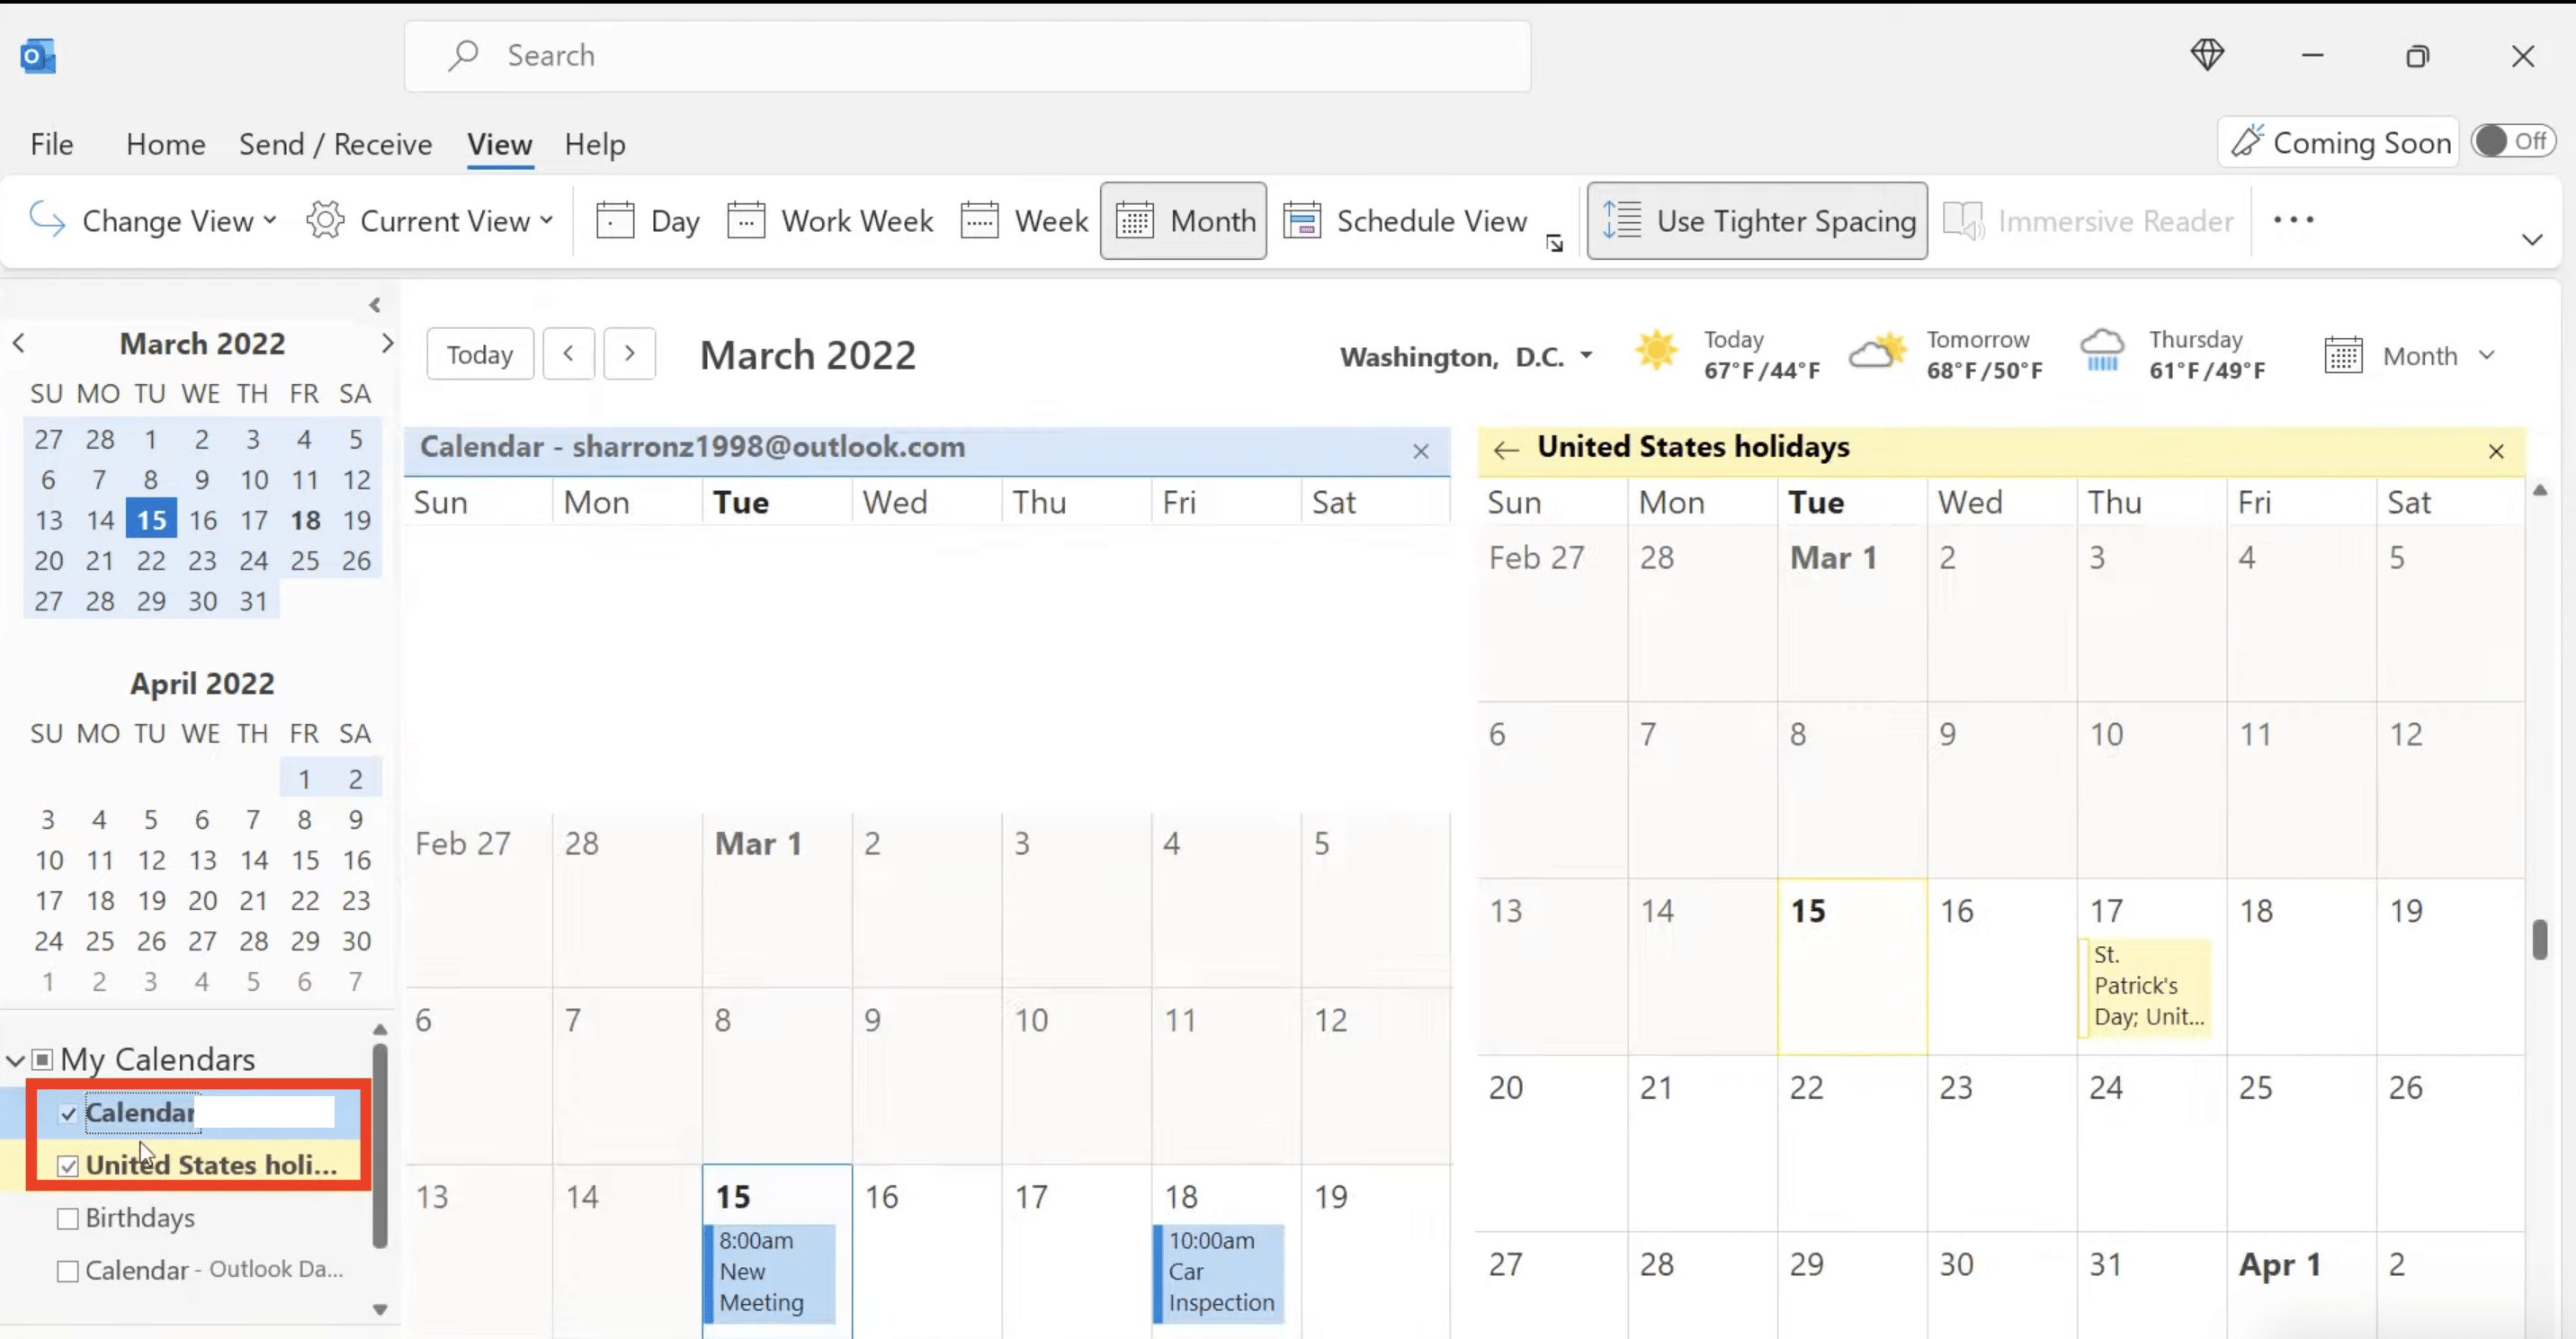 Top 10 Outlook 365 Calendar Tips & Tricks